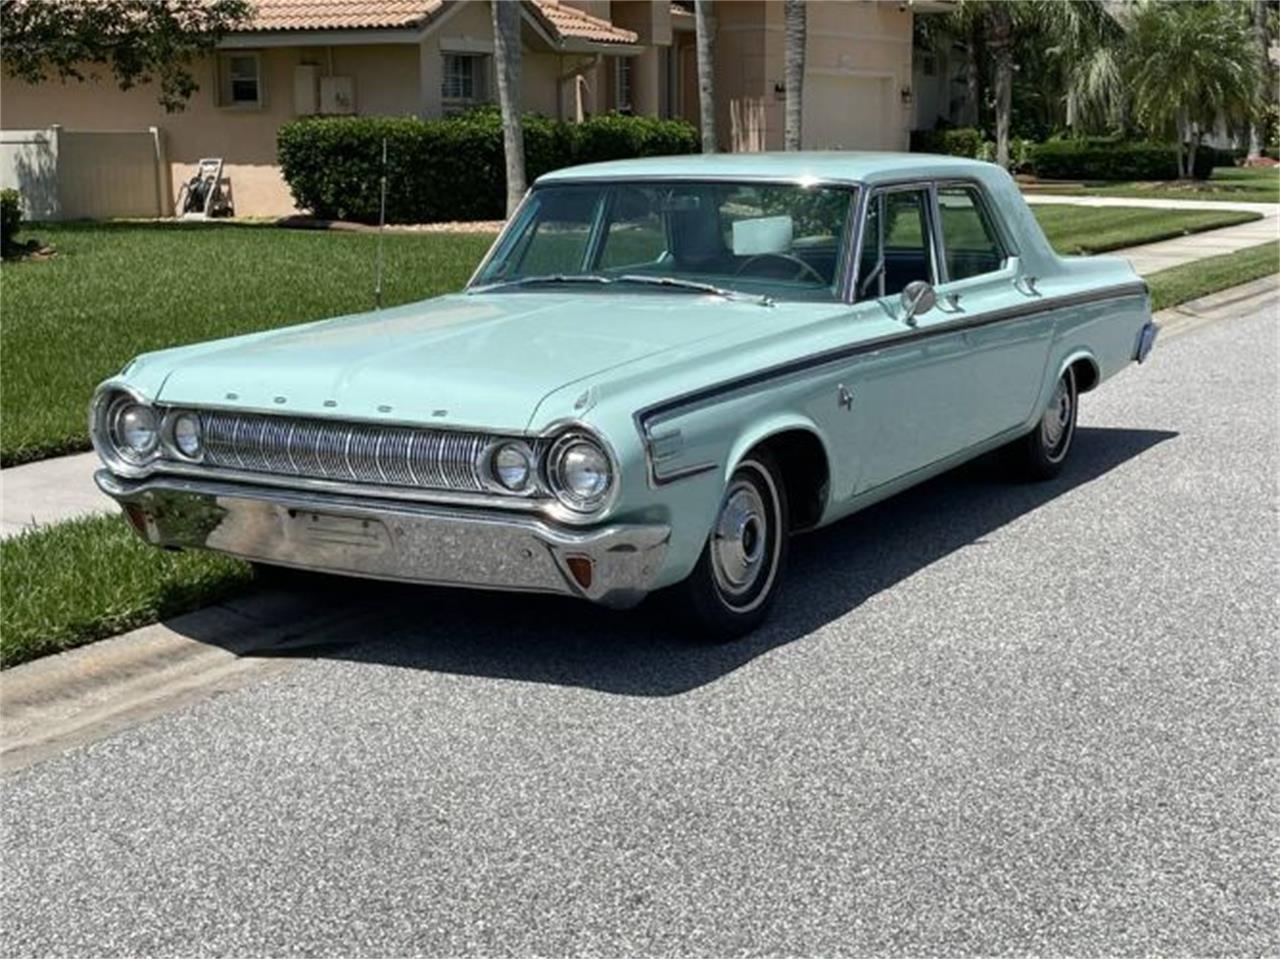 For Sale: 1964 Dodge Custom in Cadillac, Michigan for sale in Cadillac, MI